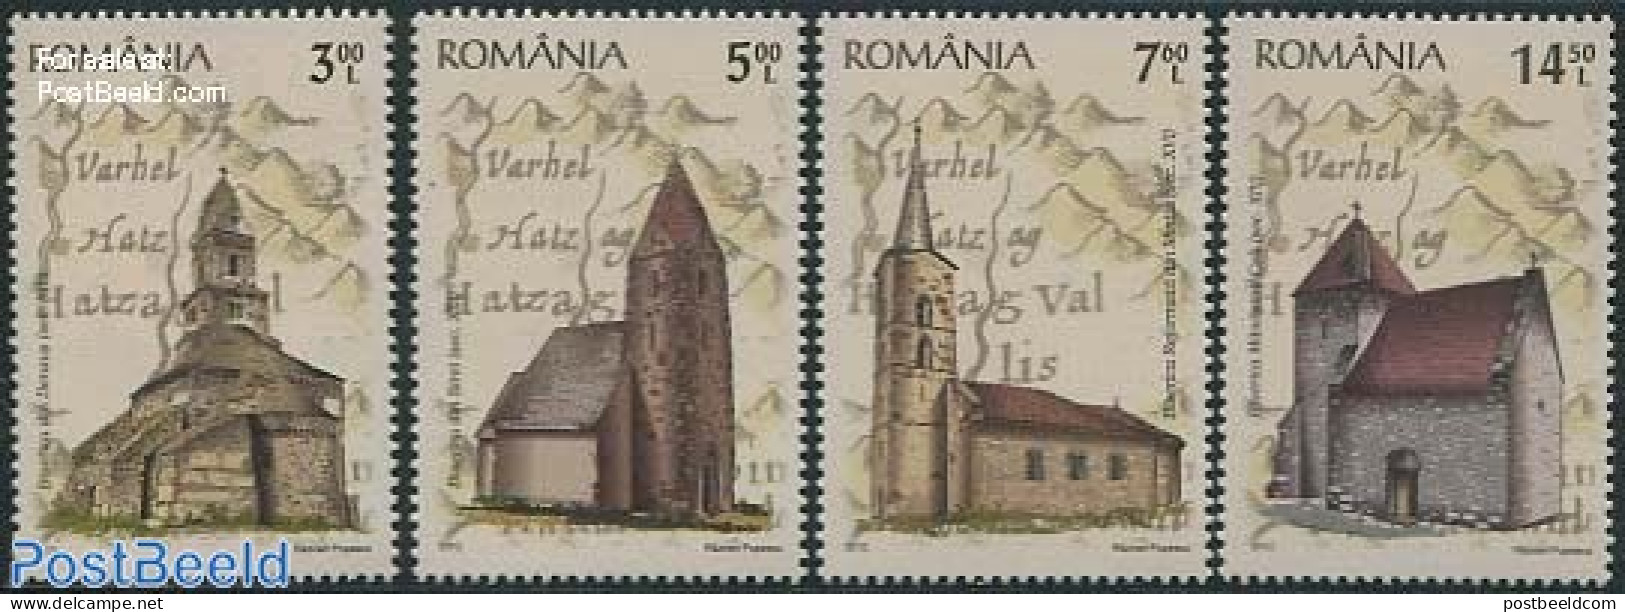 Romania 2012 Tara Hategului Church 4v, Mint NH, Religion - Churches, Temples, Mosques, Synagogues - Ungebraucht